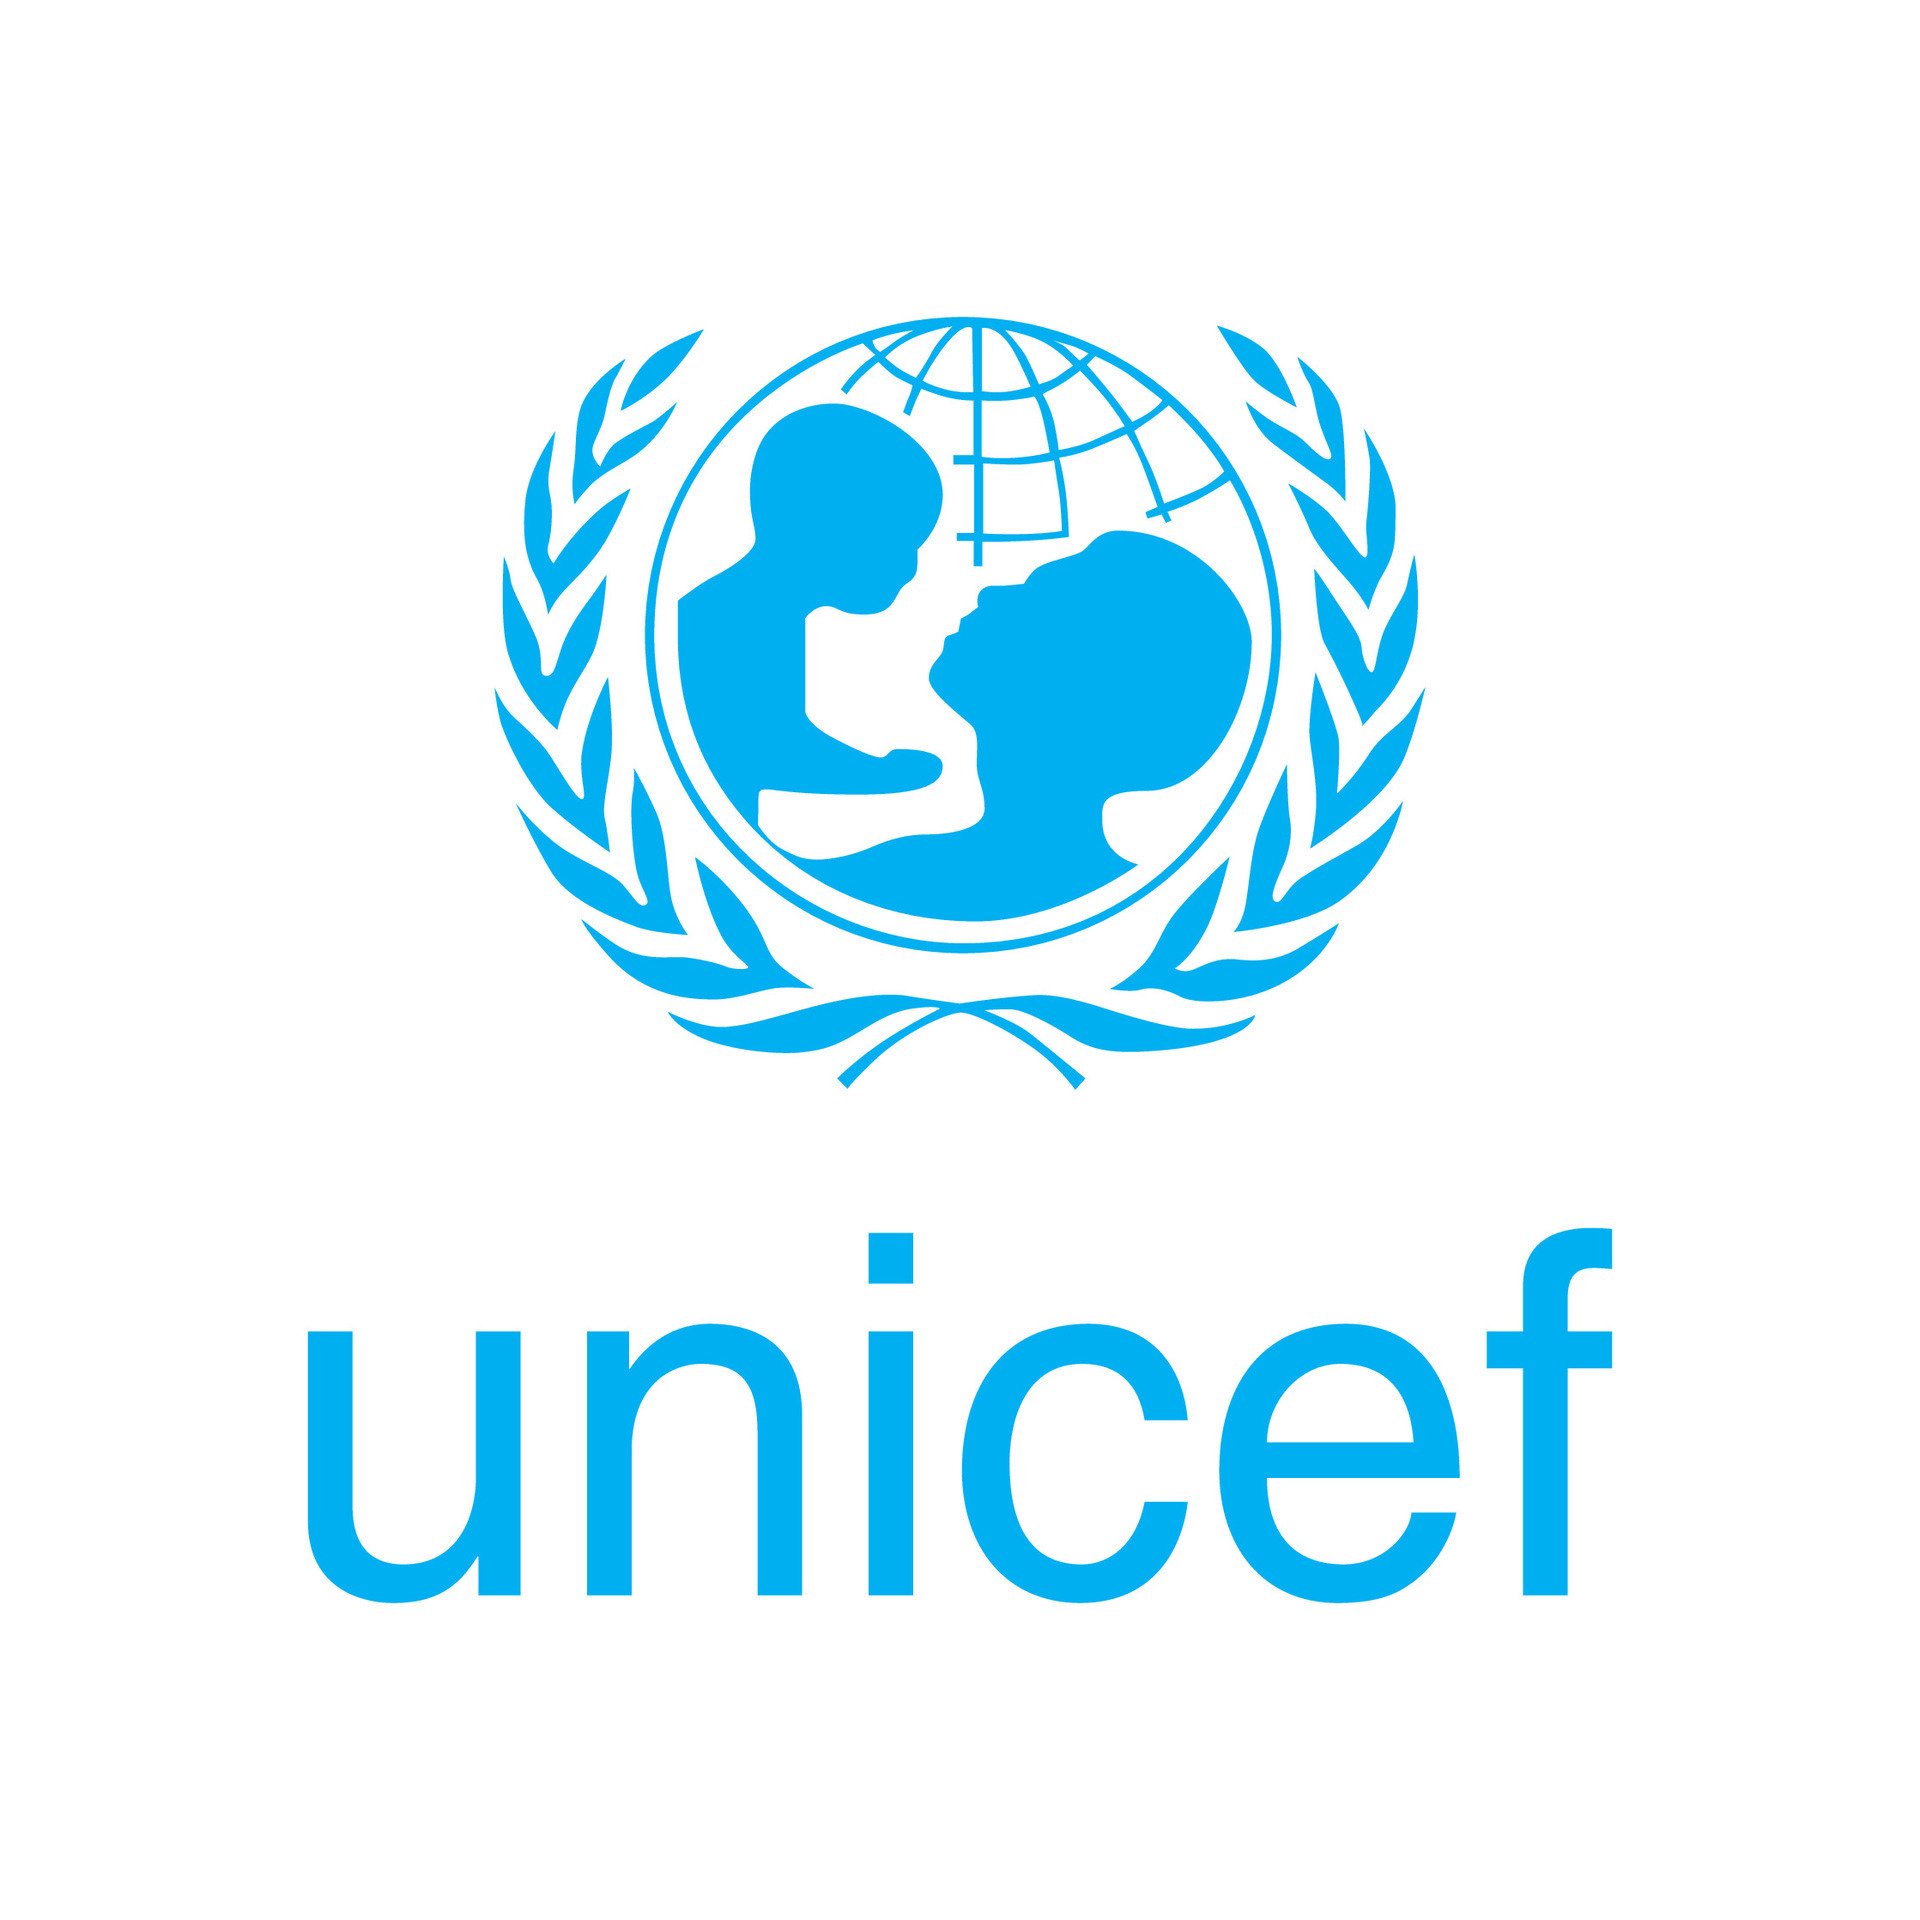 unicef-logo-editorial-free-vector.jpg